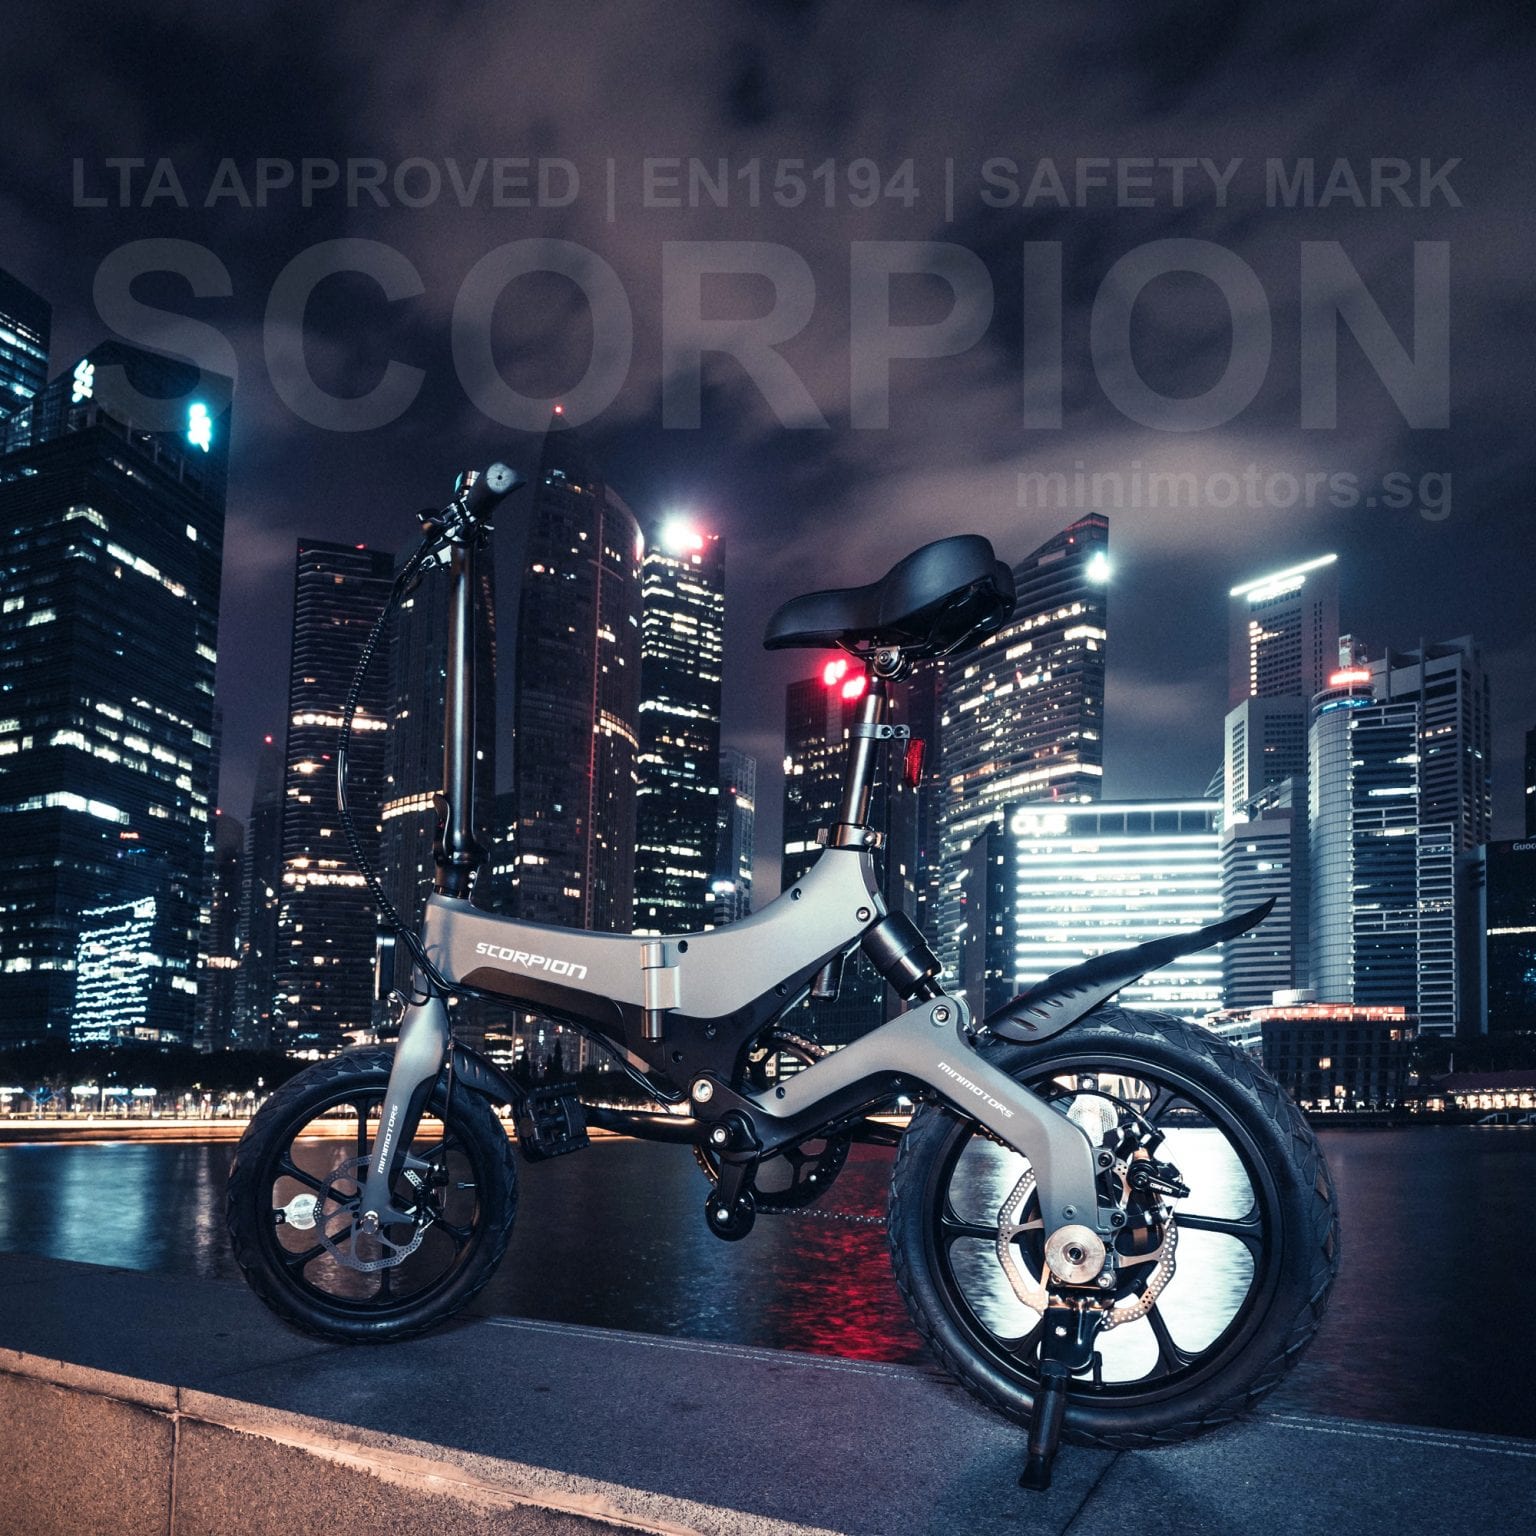 Scorpion Electric Bike LTA Approved Free Gift x6 Free 1 Year